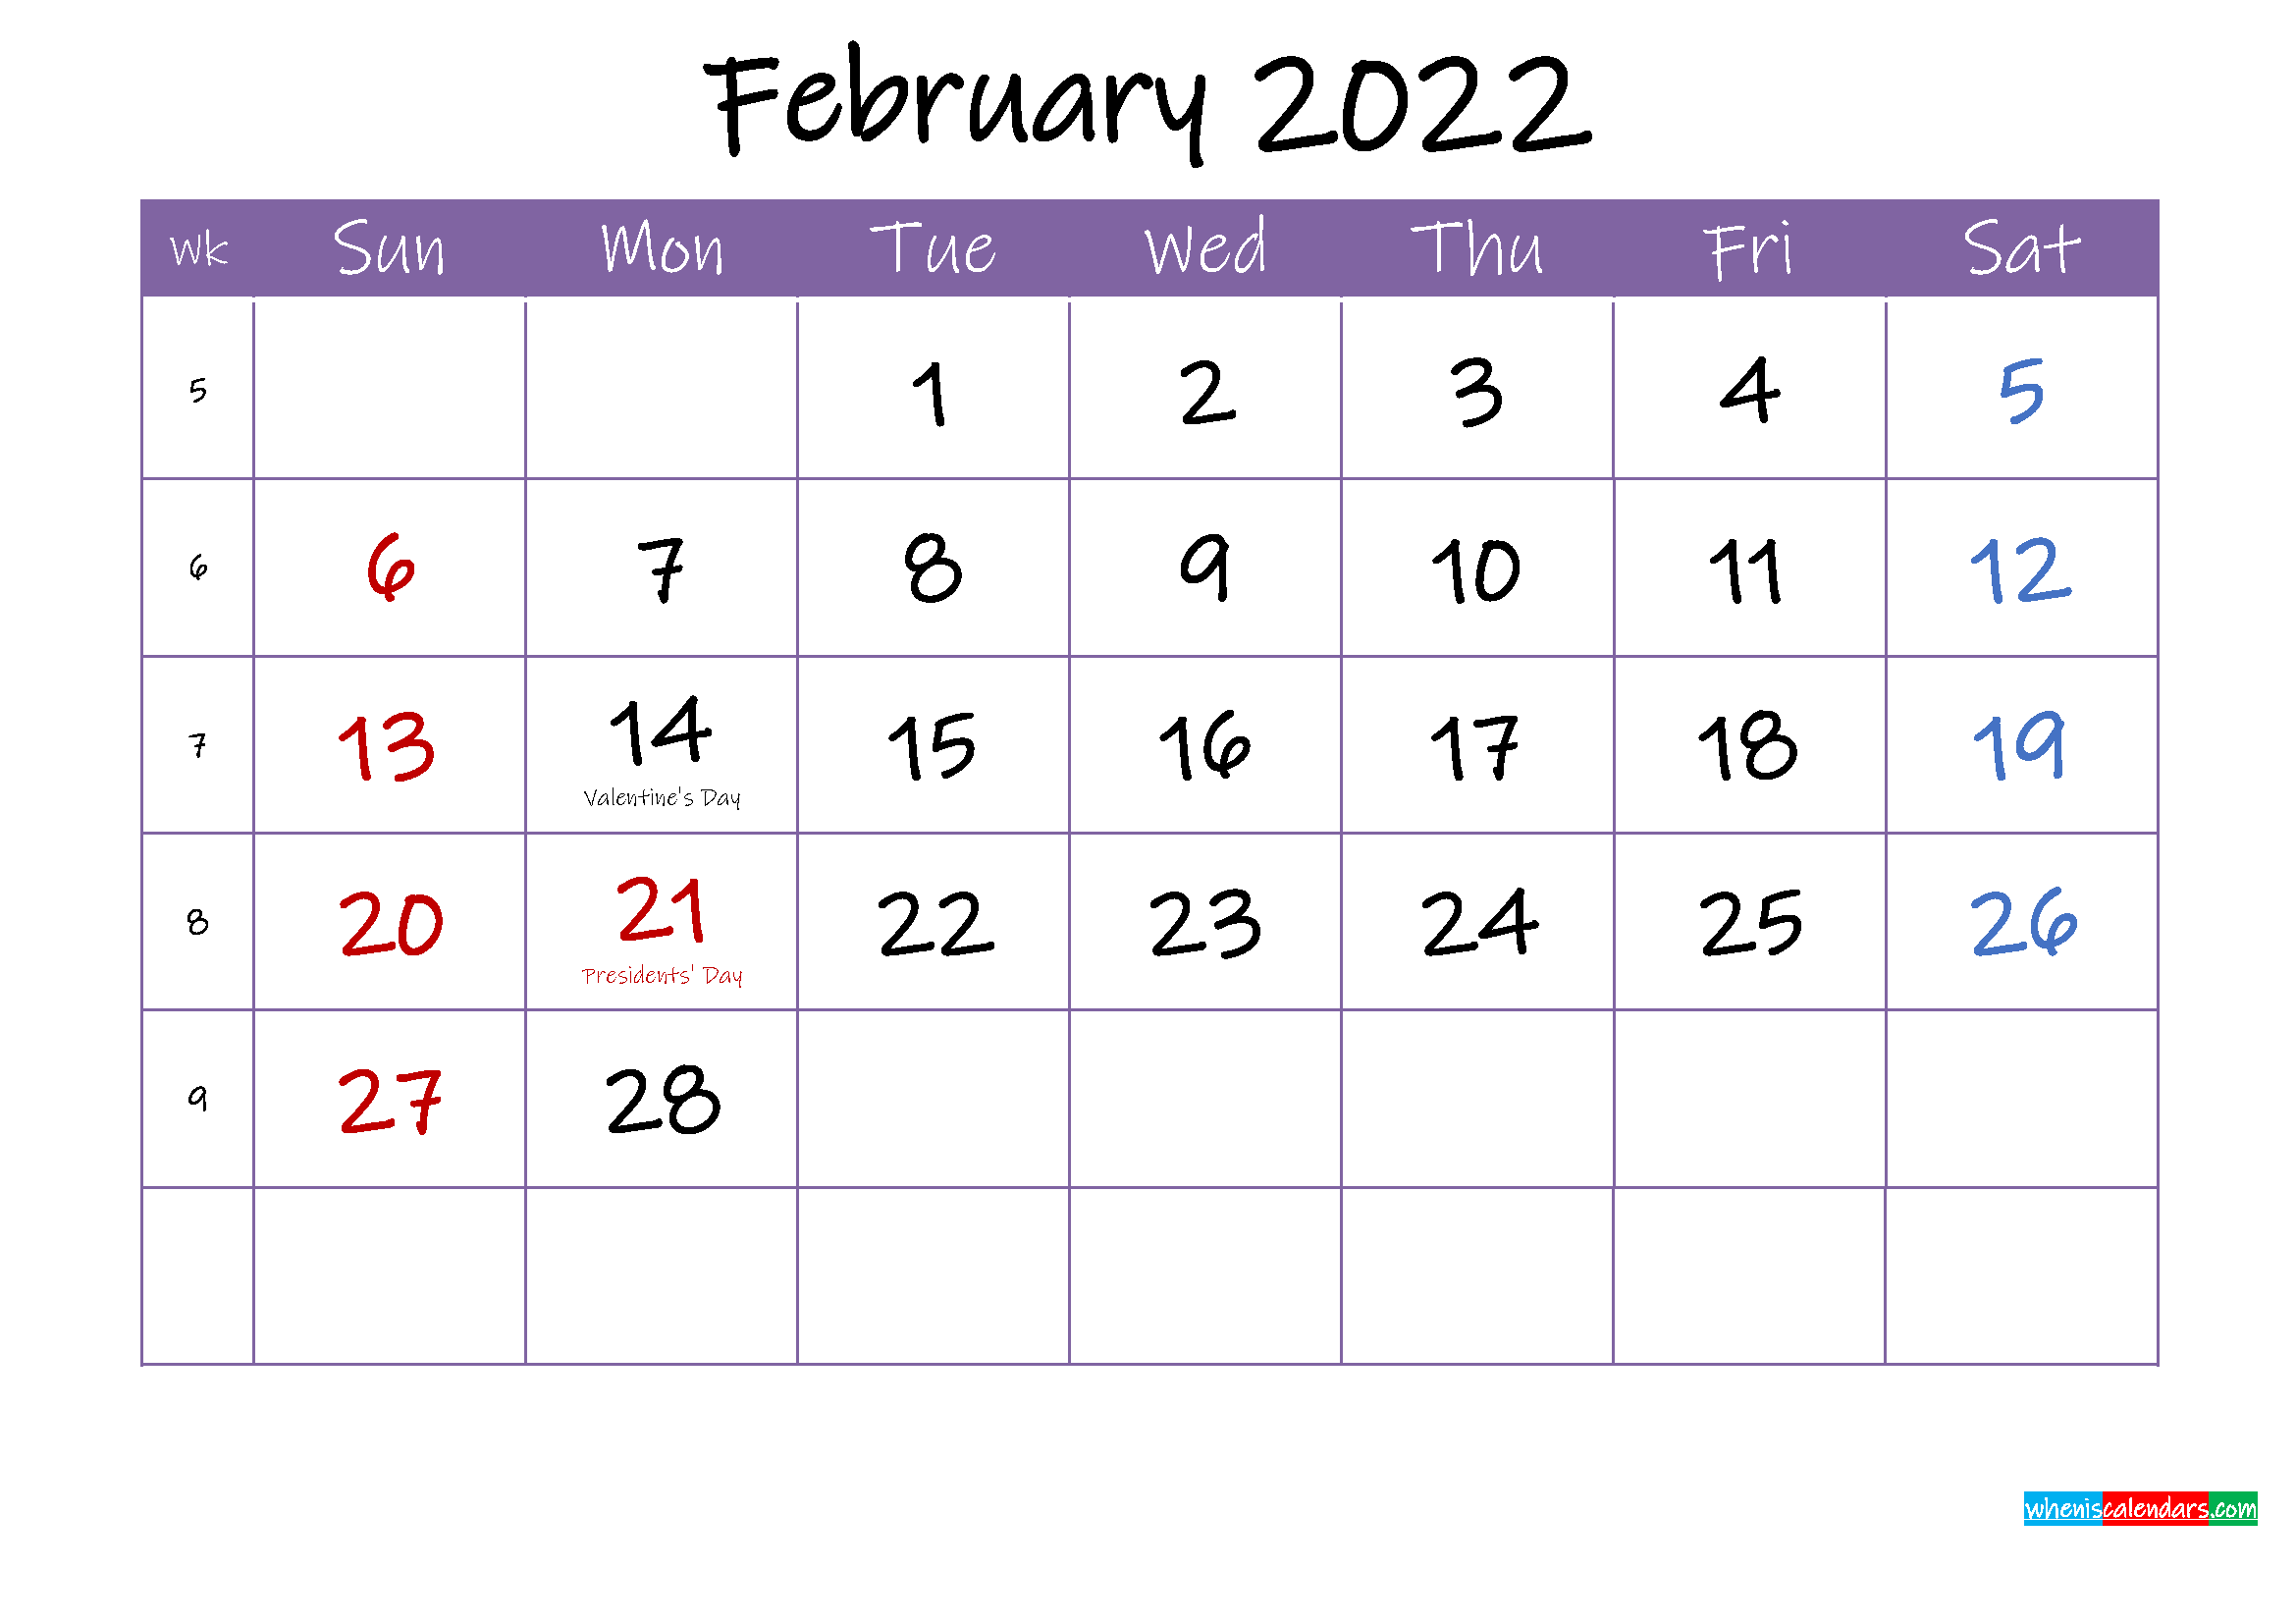 February 2022 Calendar with Holidays Printable - Template ...